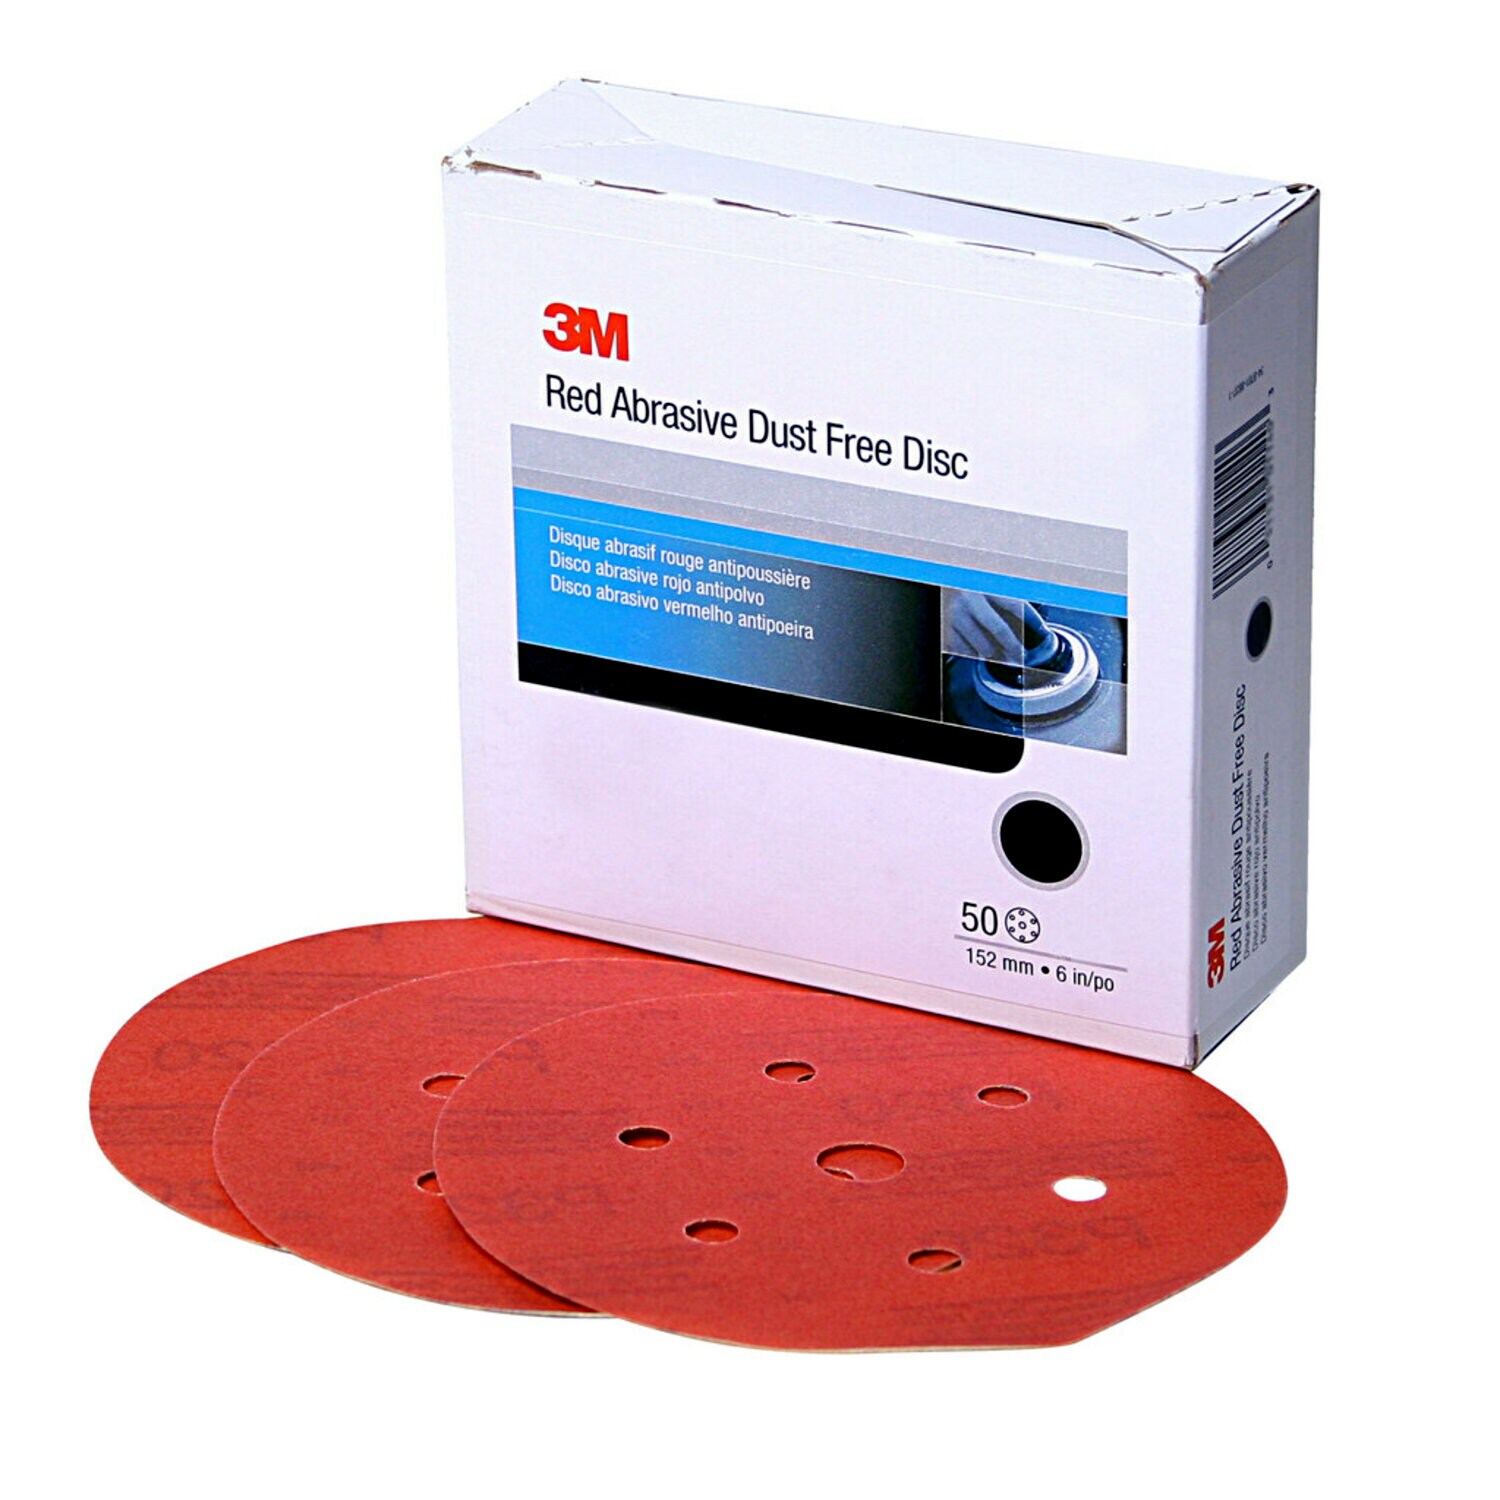 7000045459 - 3M Hookit Red Abrasive Disc Dust Free, 01144, 6 in, P150, 50 discs per
carton, 6 cartons per case